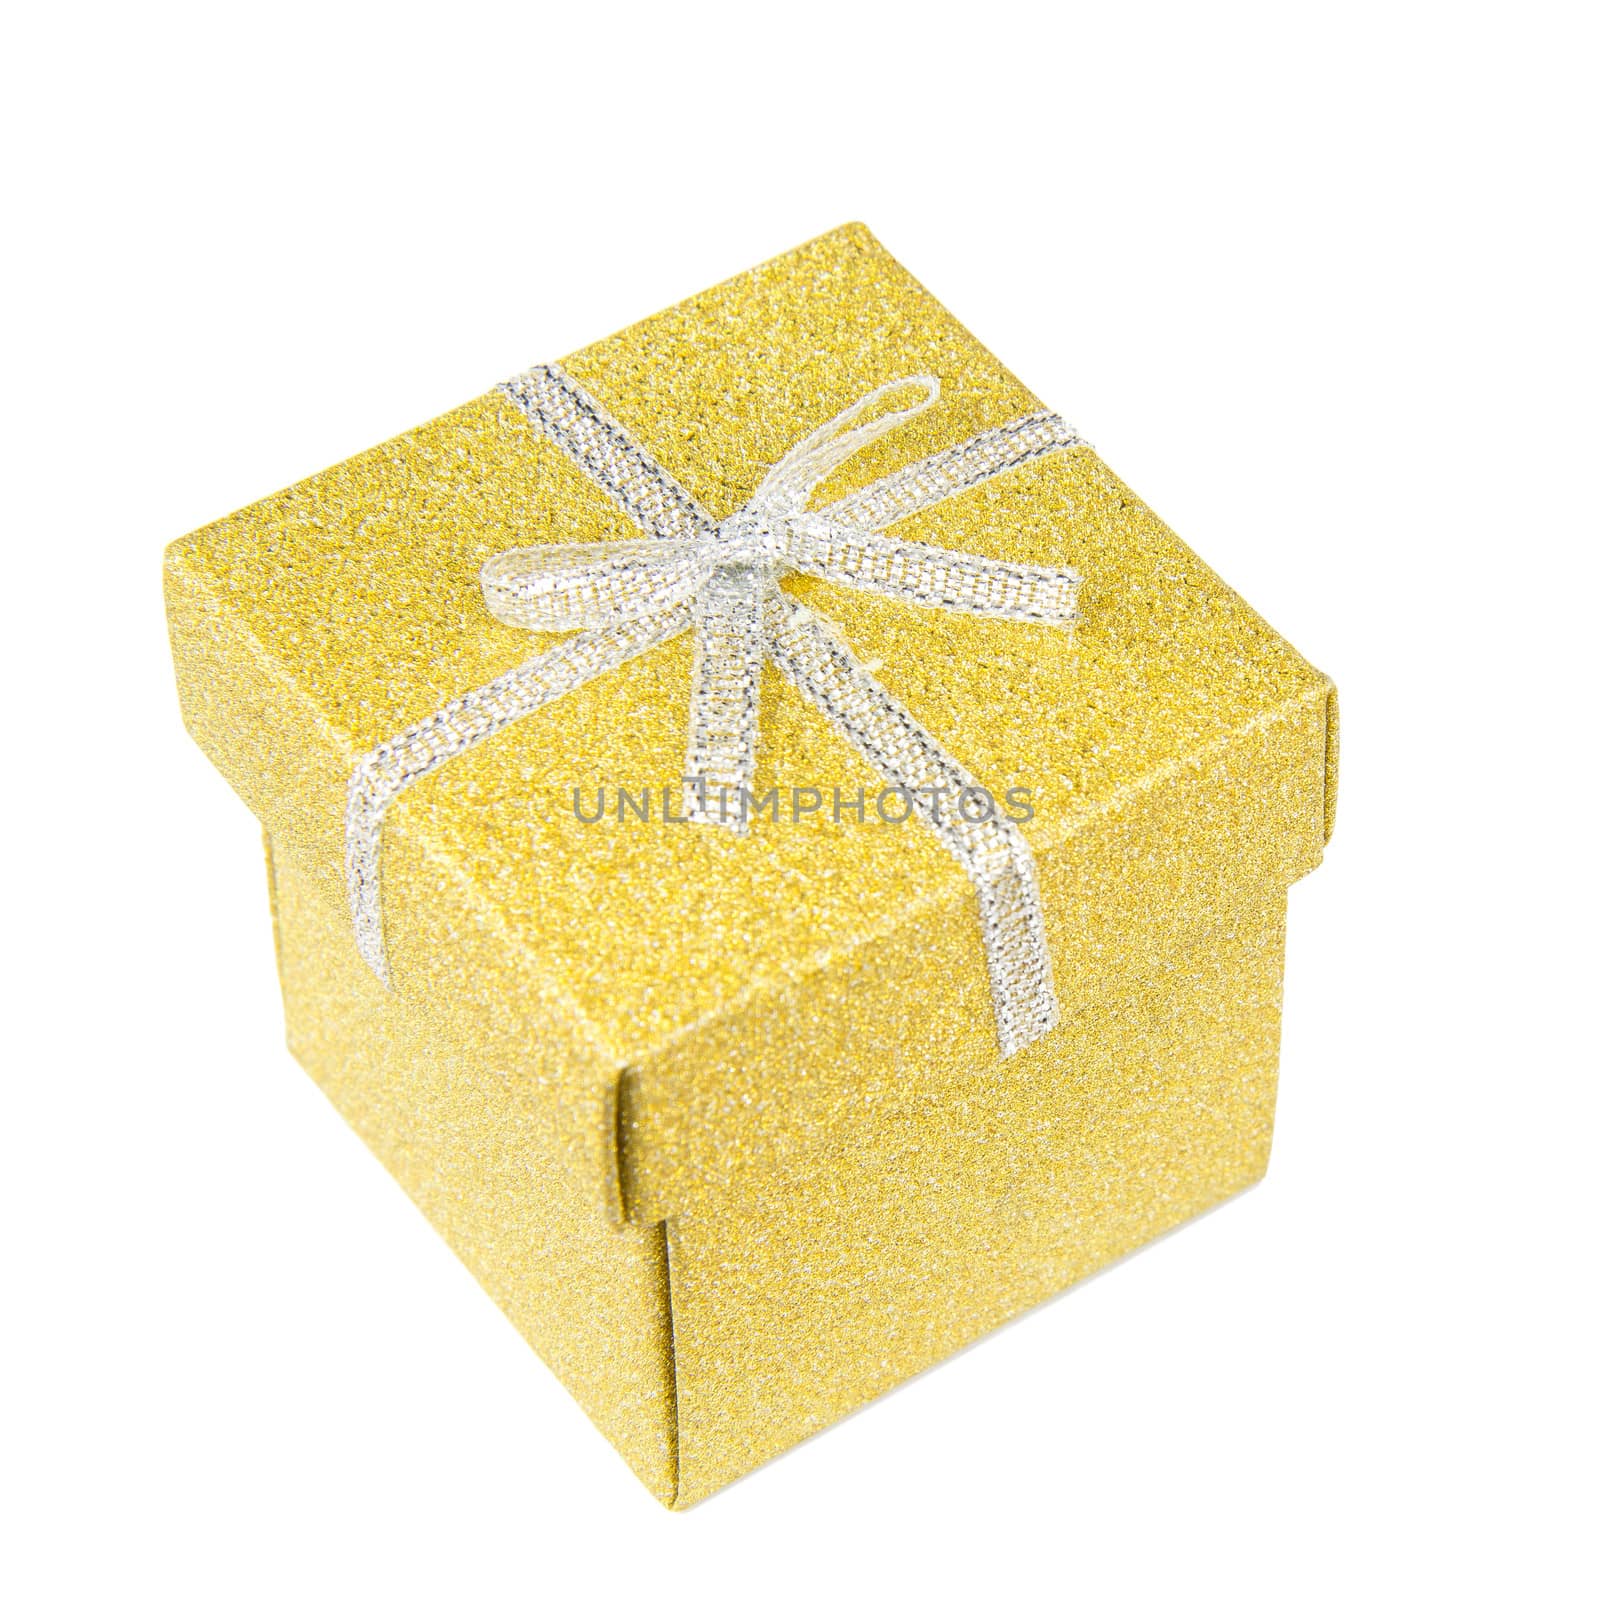 Golden gift box on white by Brigida_Soriano